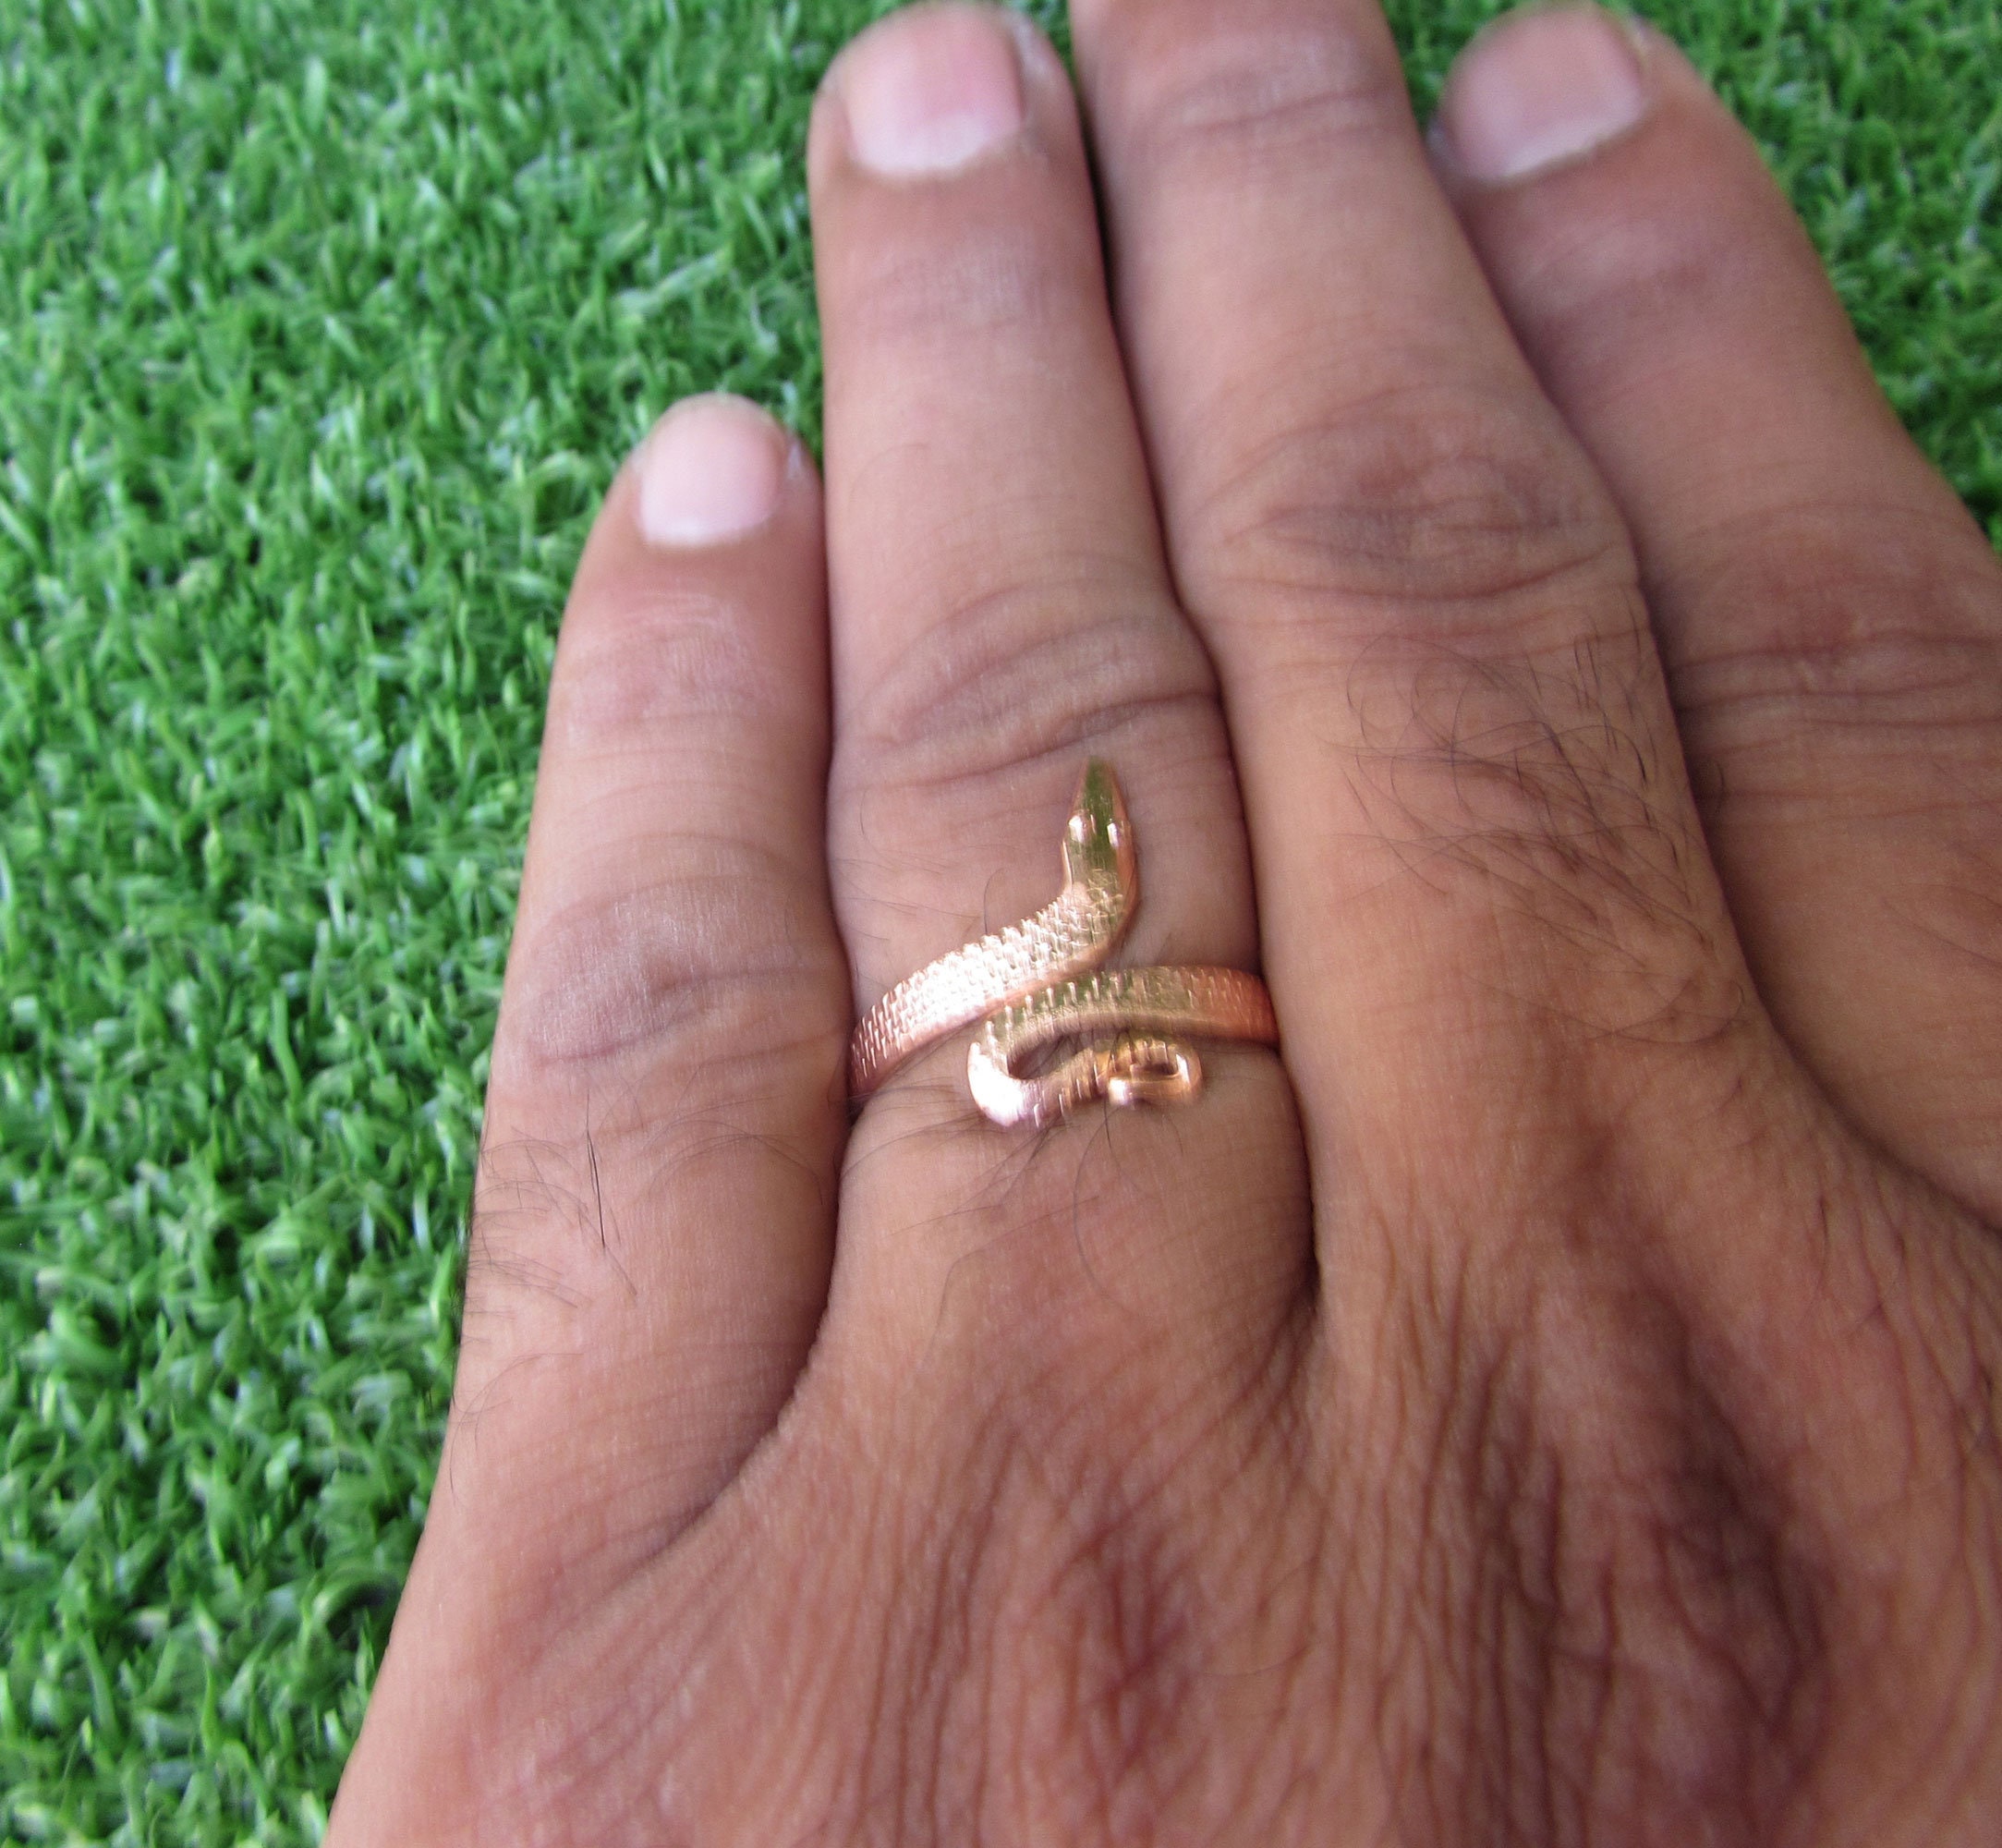 Benefits of wearing gold ring on index finger – Albert Hern